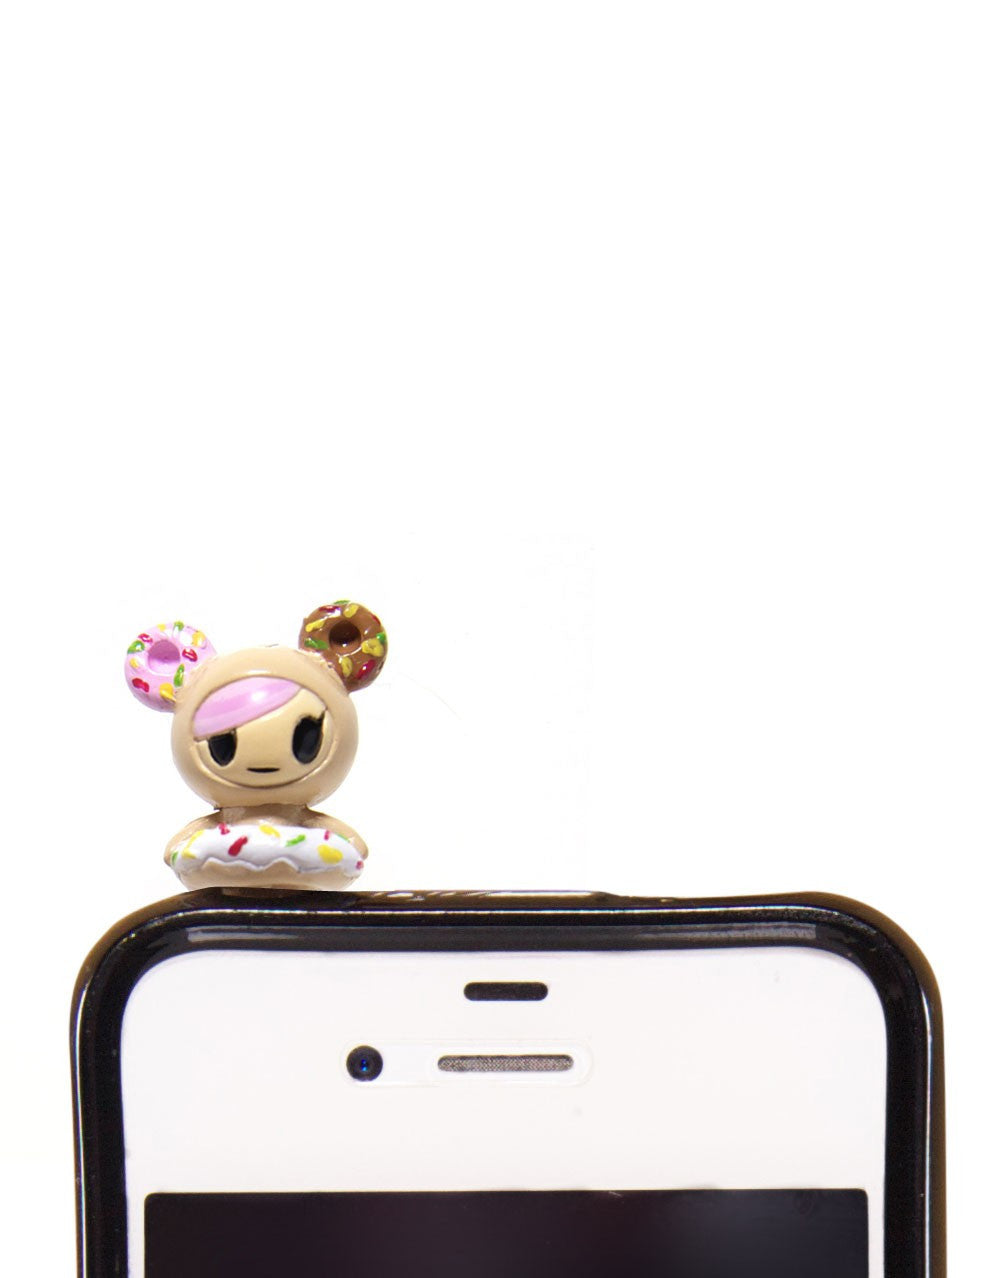 tokidoki - Phonezies Phone Charms (Blind Assortment) - The Giant Peach